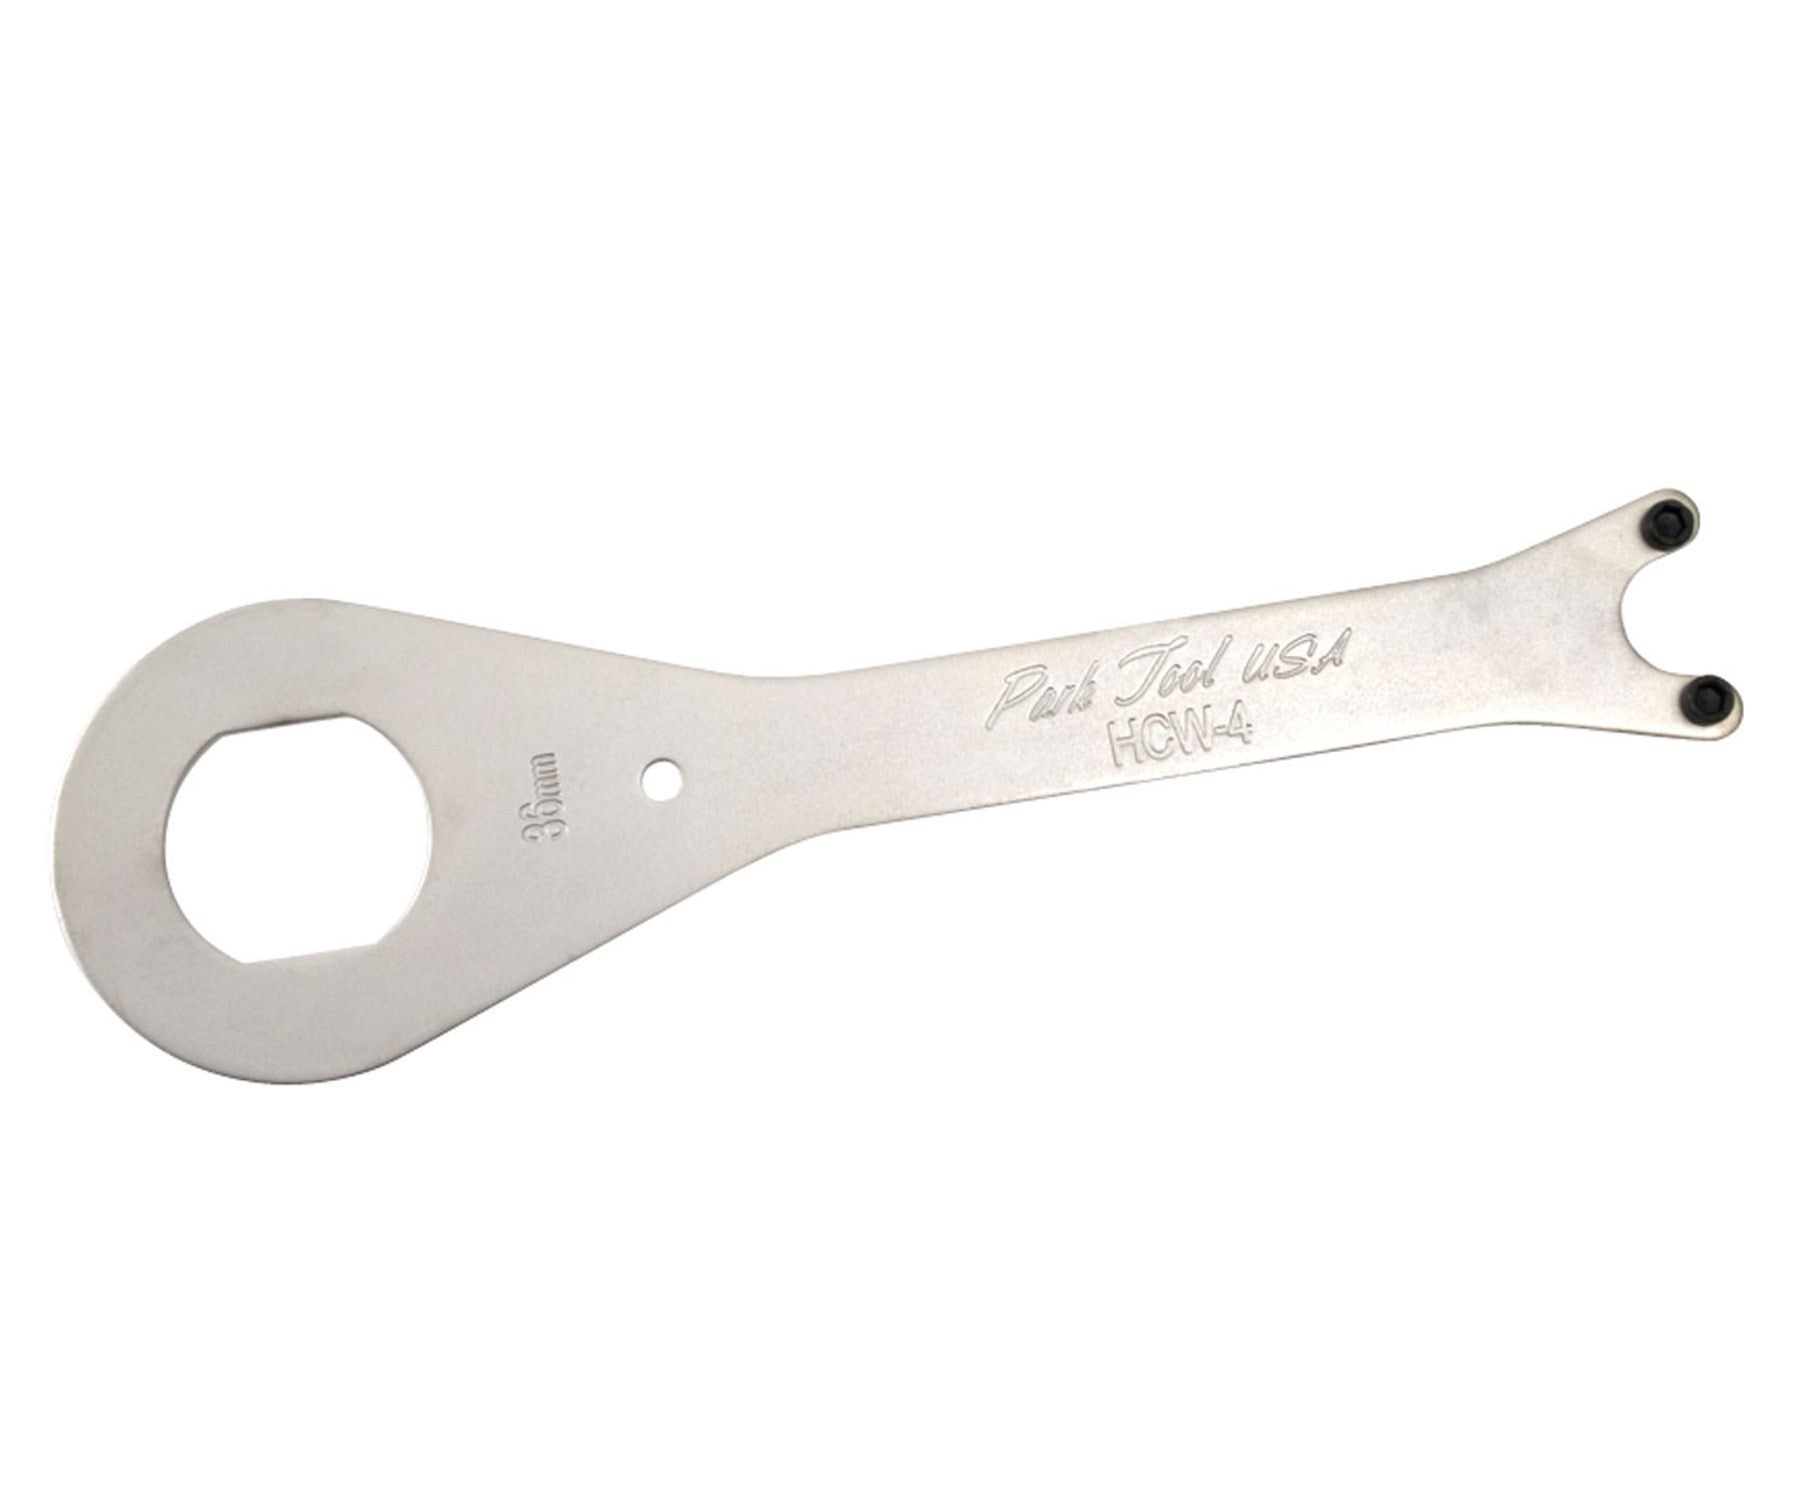 Park Tool HCW-4 bottom bracket tool - Retrogression Fixed Gear